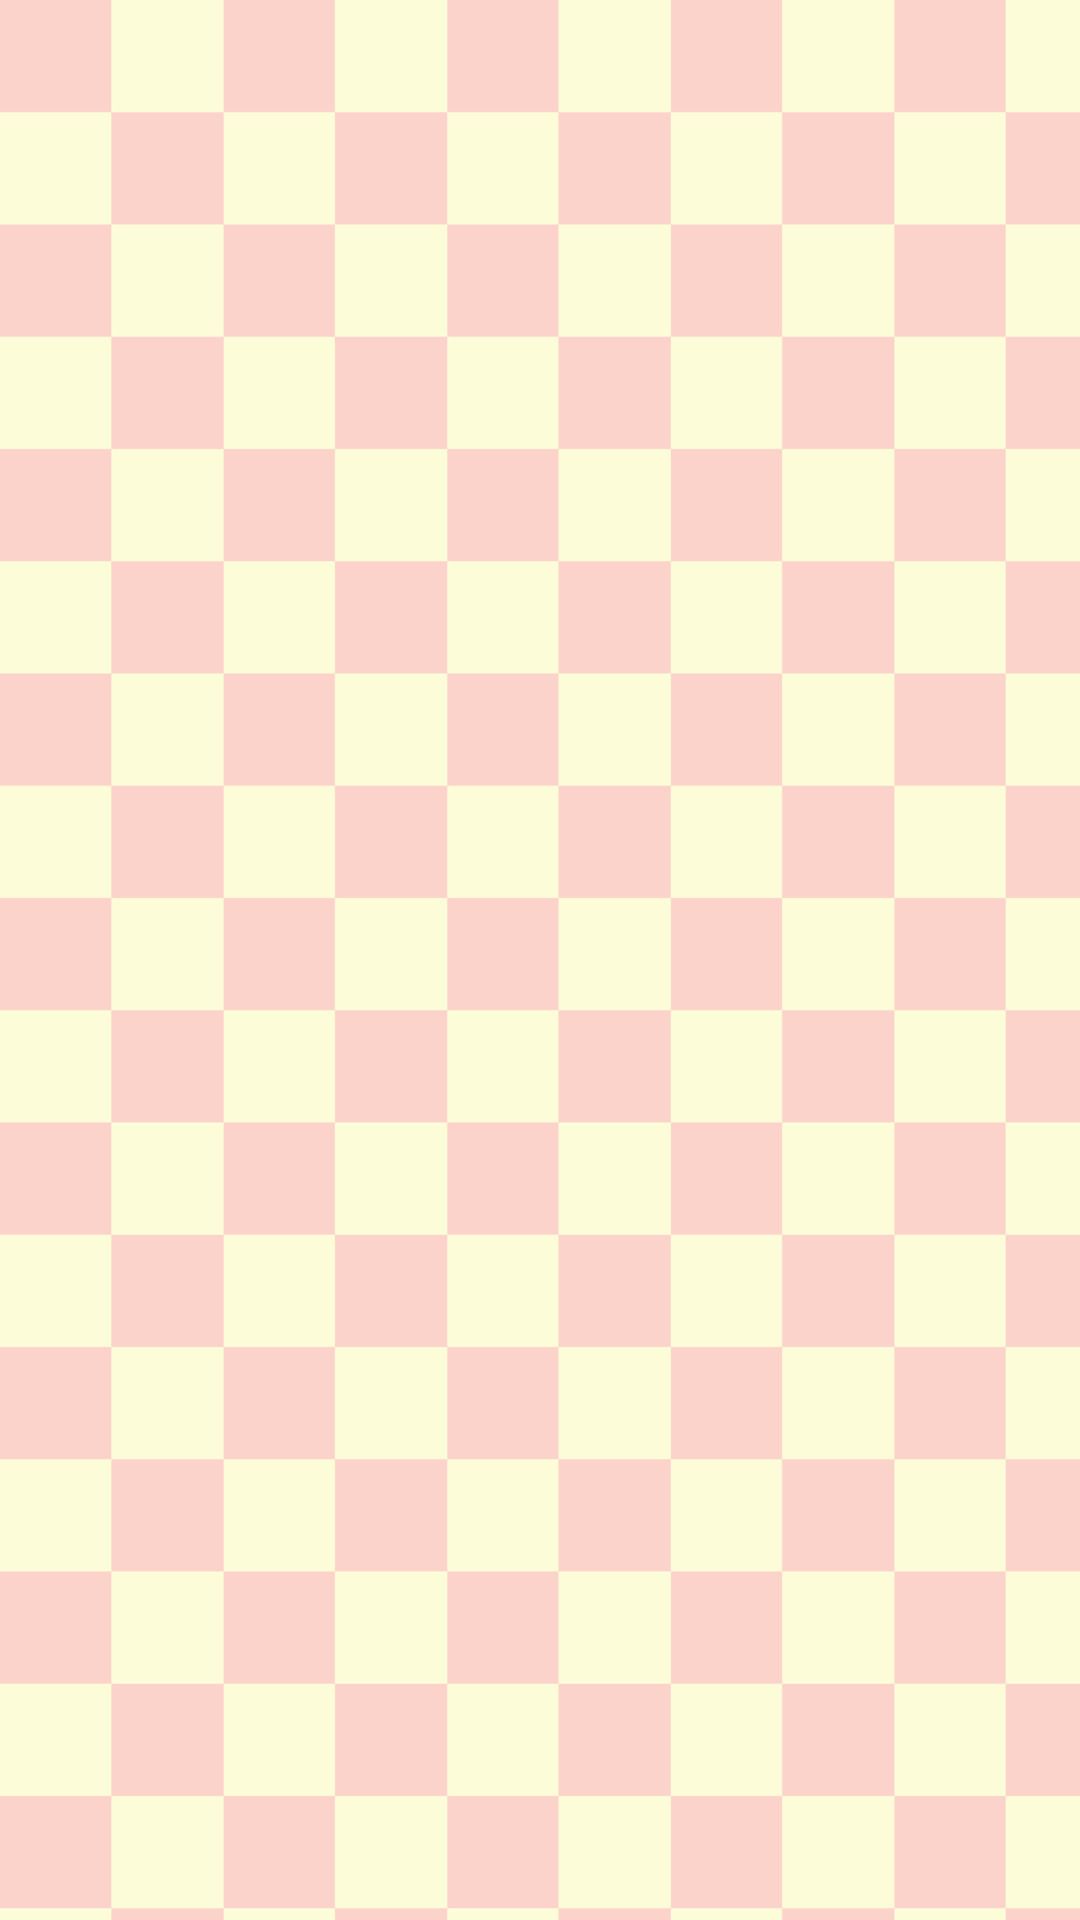 A pattern of pink and yellow squares - Pastel orange